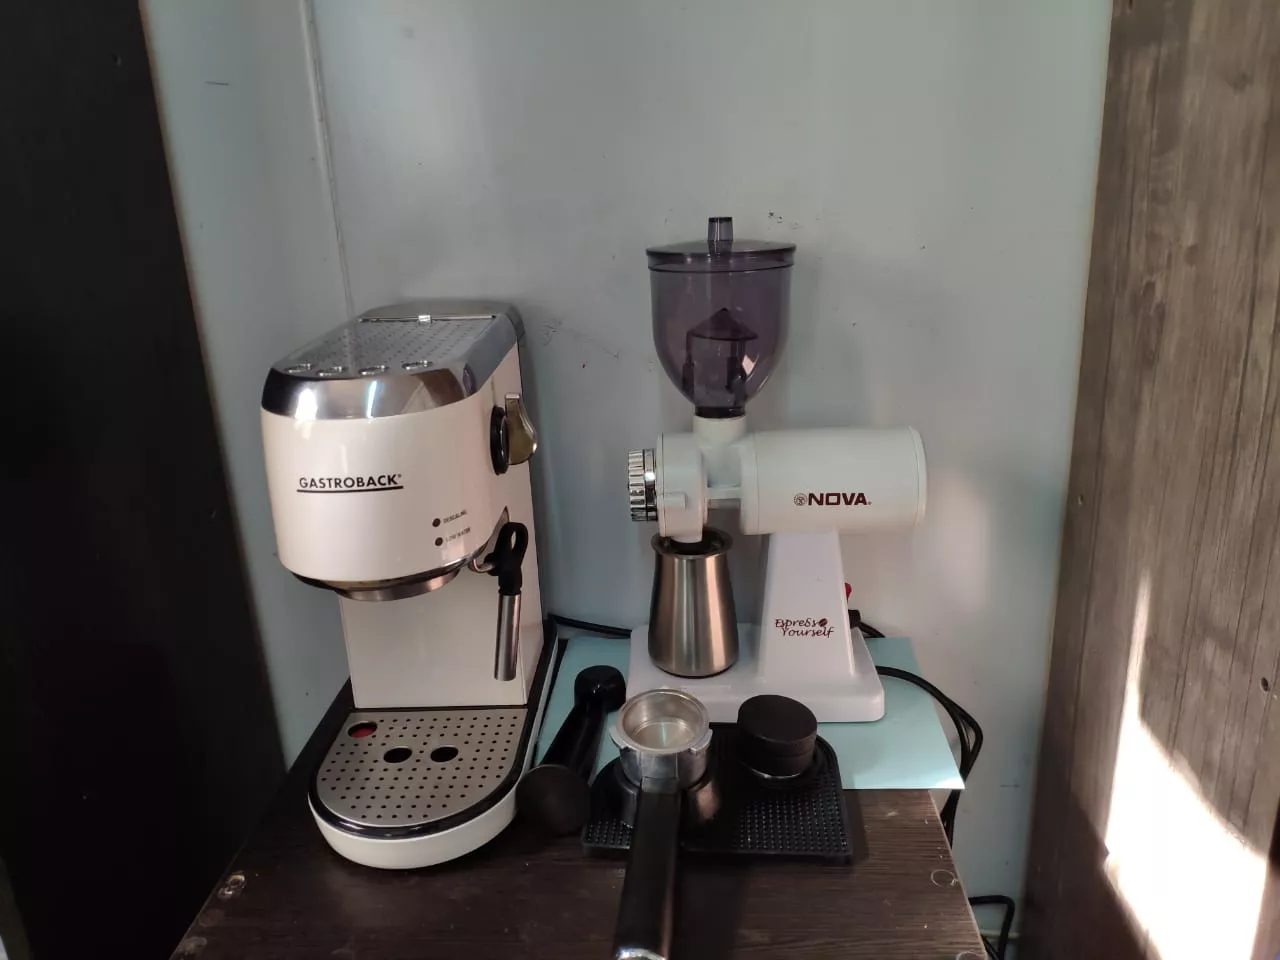 آسیاب قهوه صنعتی نوا مدل NEWFACE3660